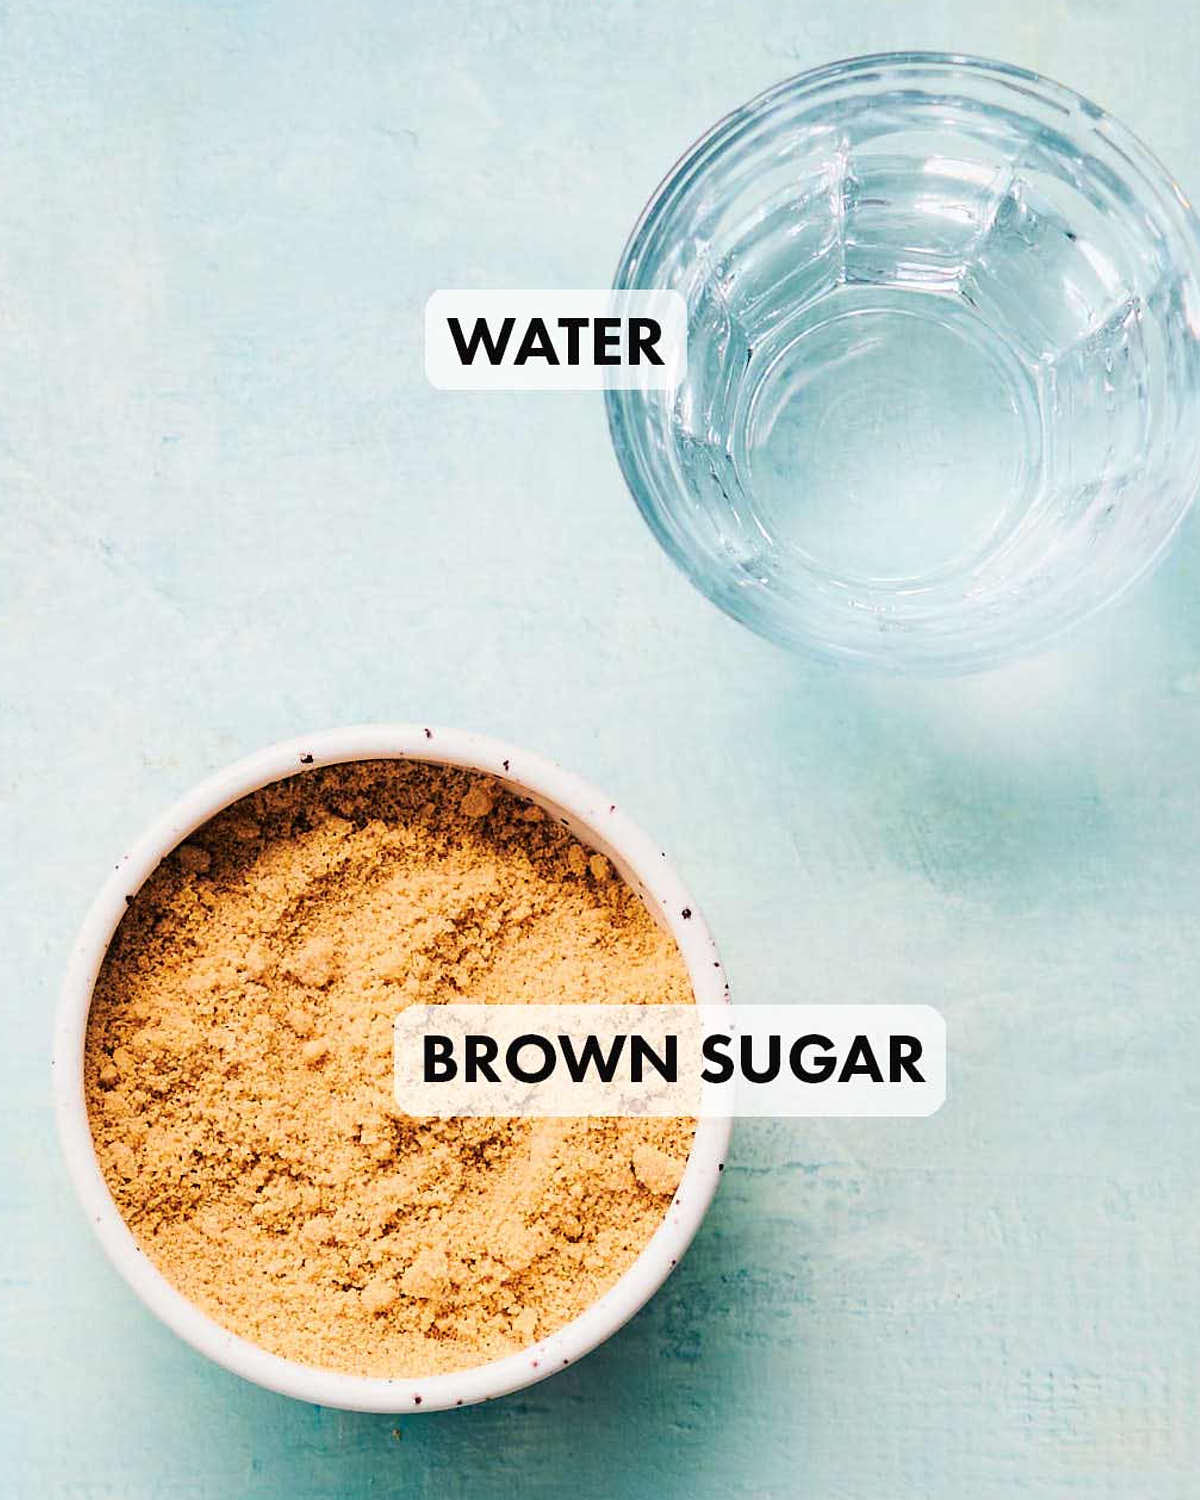 Water and brown sugar ingredients to make simple syrup.